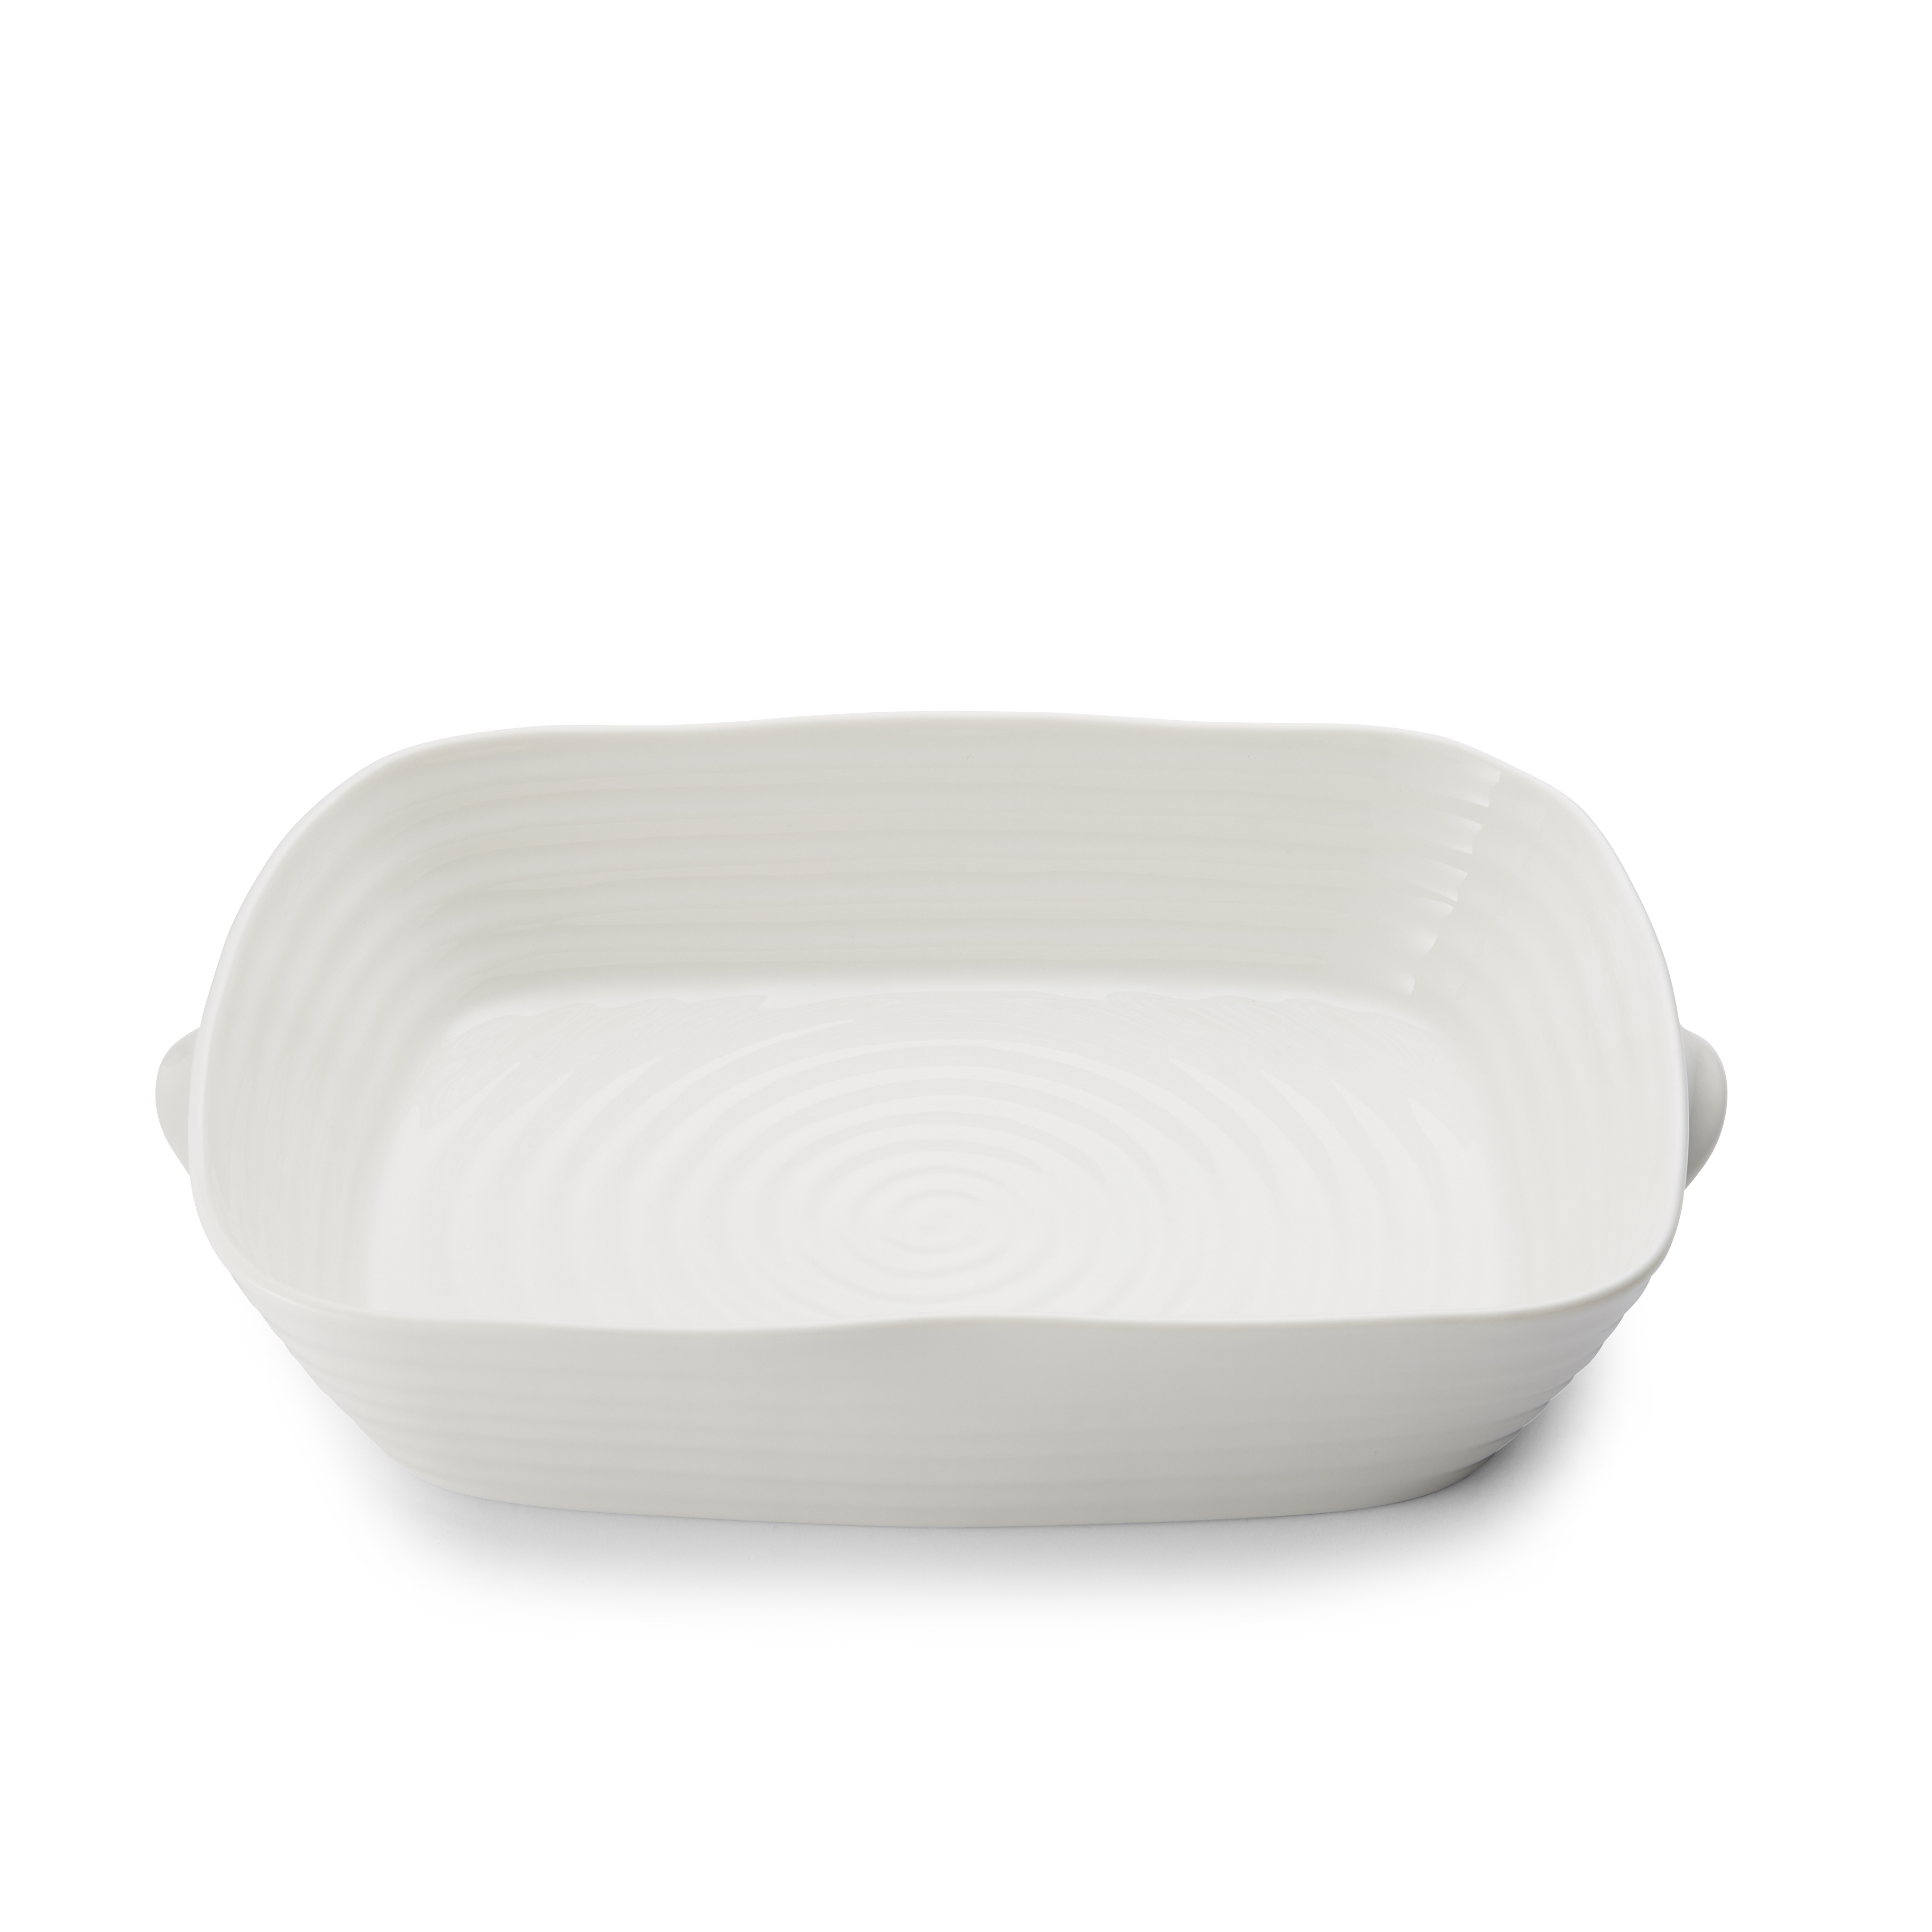 Sophie Conran White Medium Handled Rectangular Roasting Dish image number null